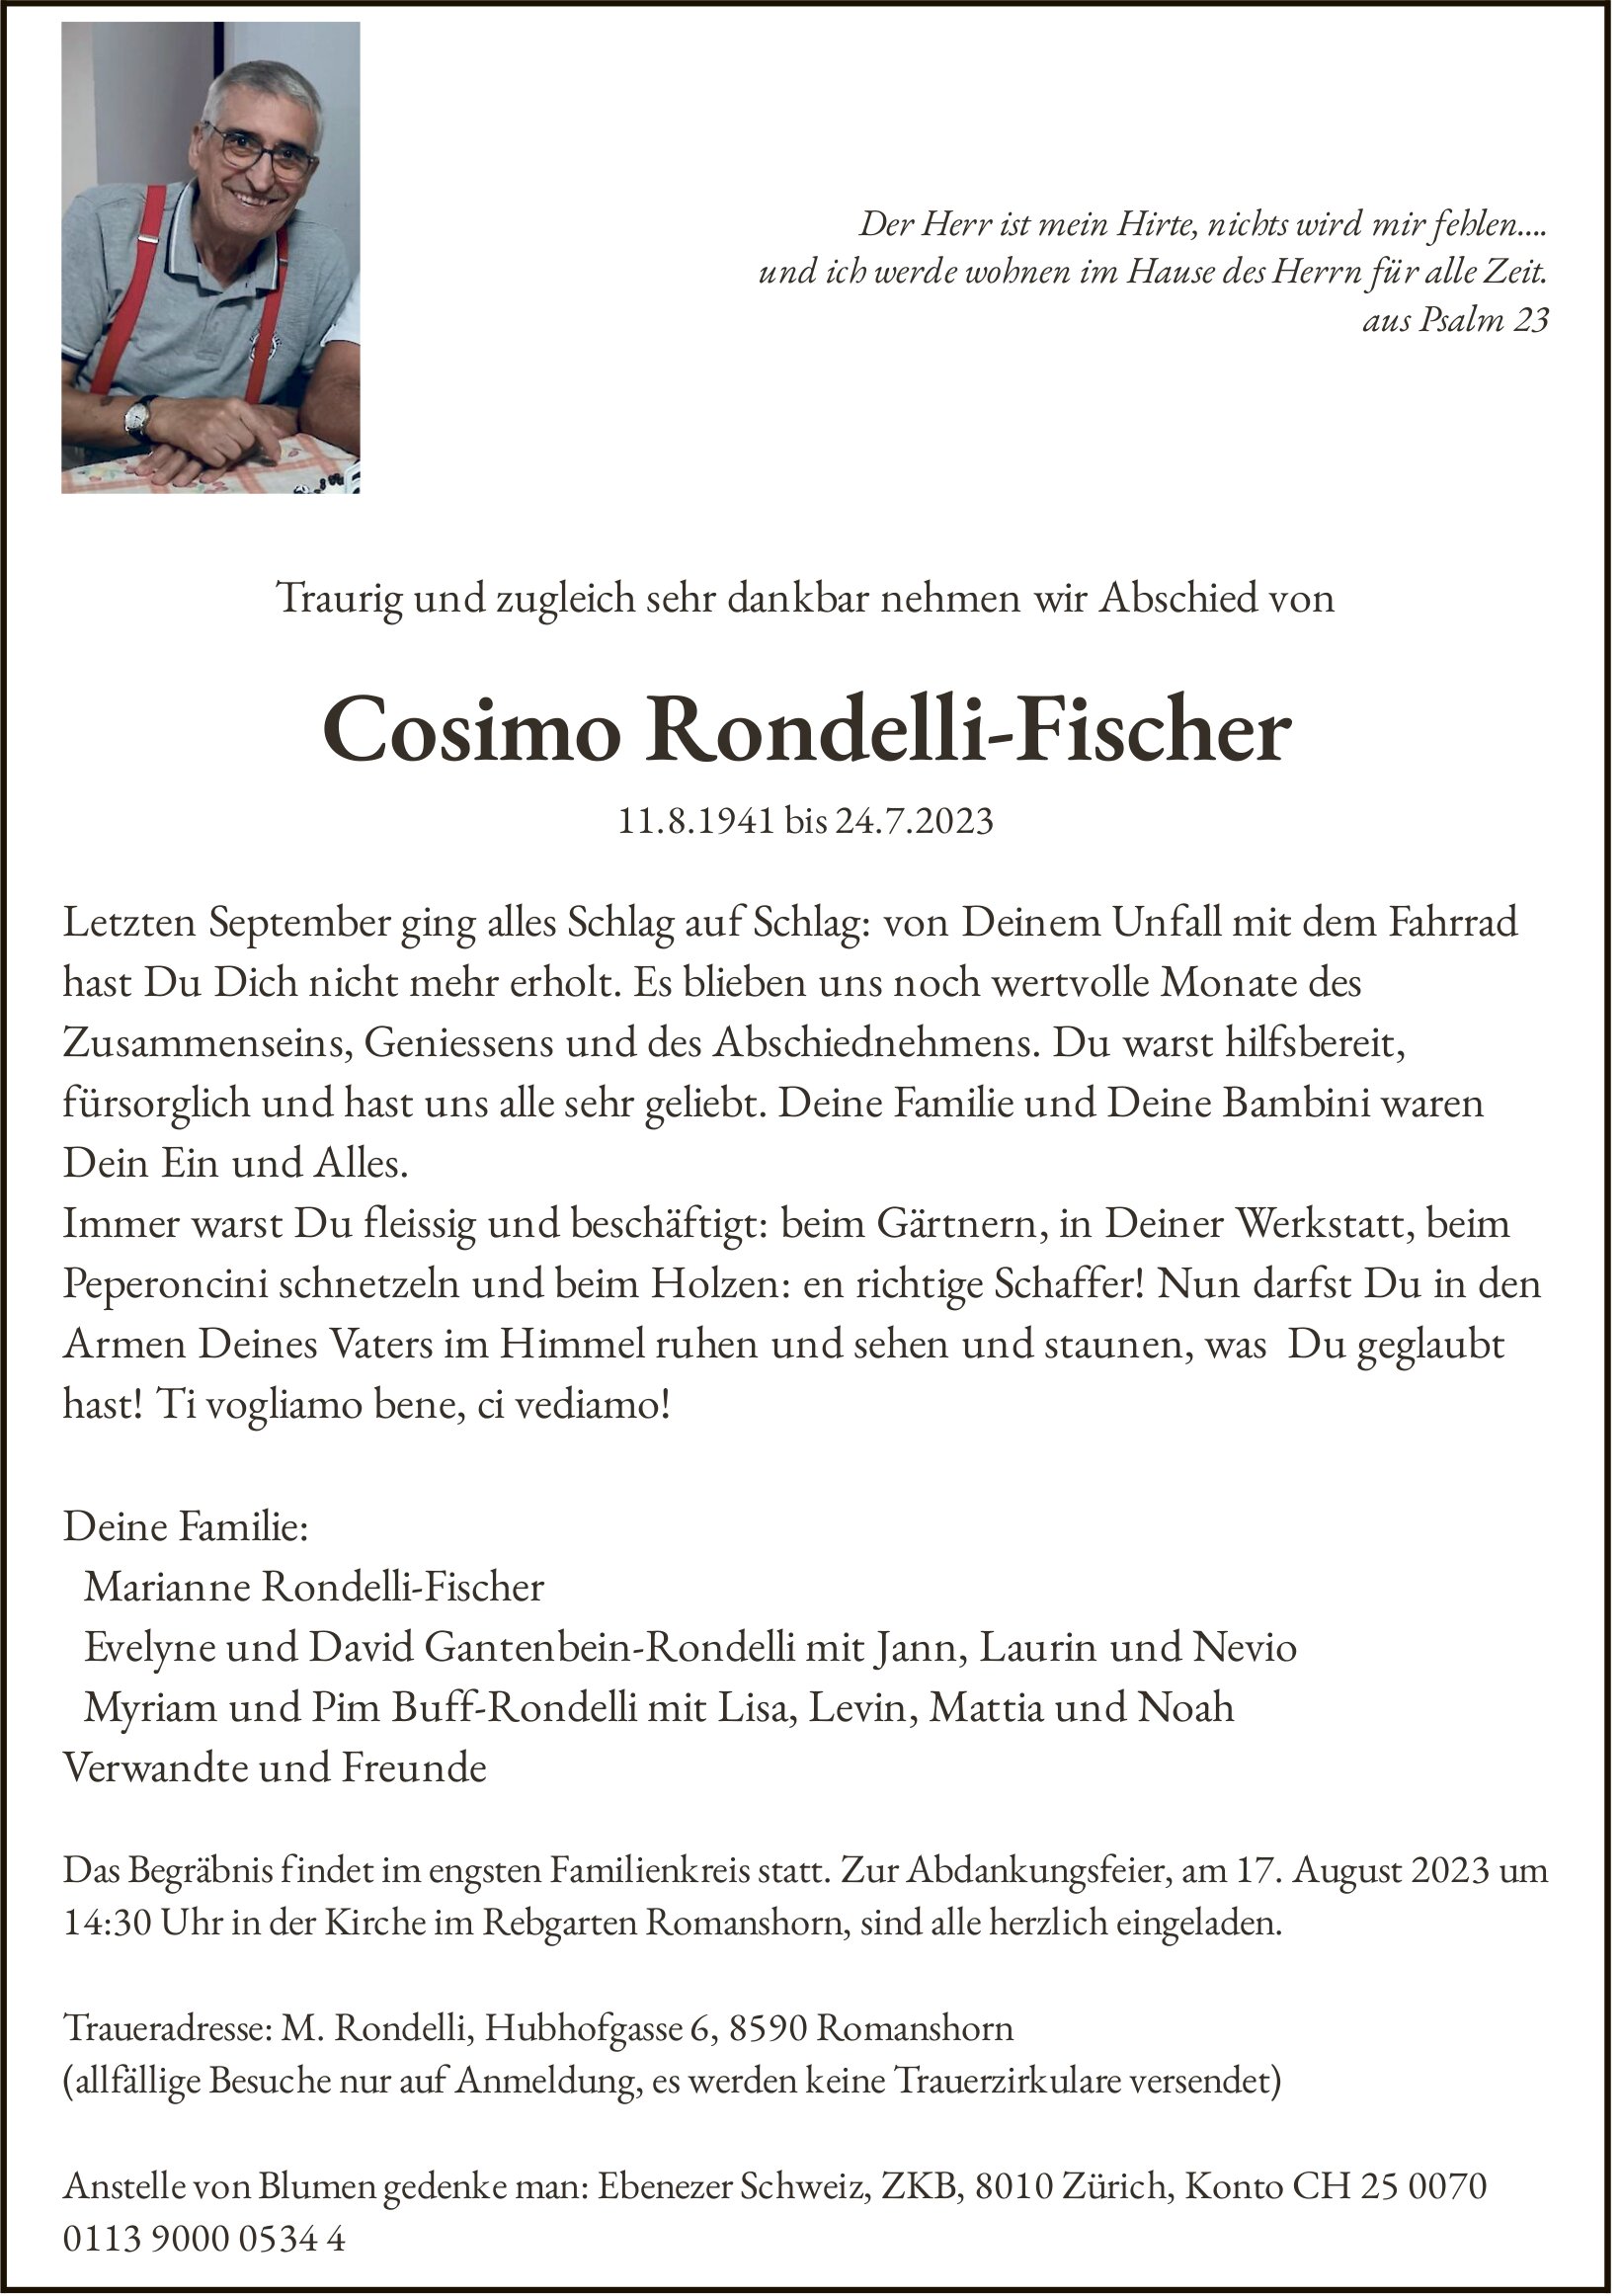 Rondelli-Fischer Cosimo, Juli 2023 / TA